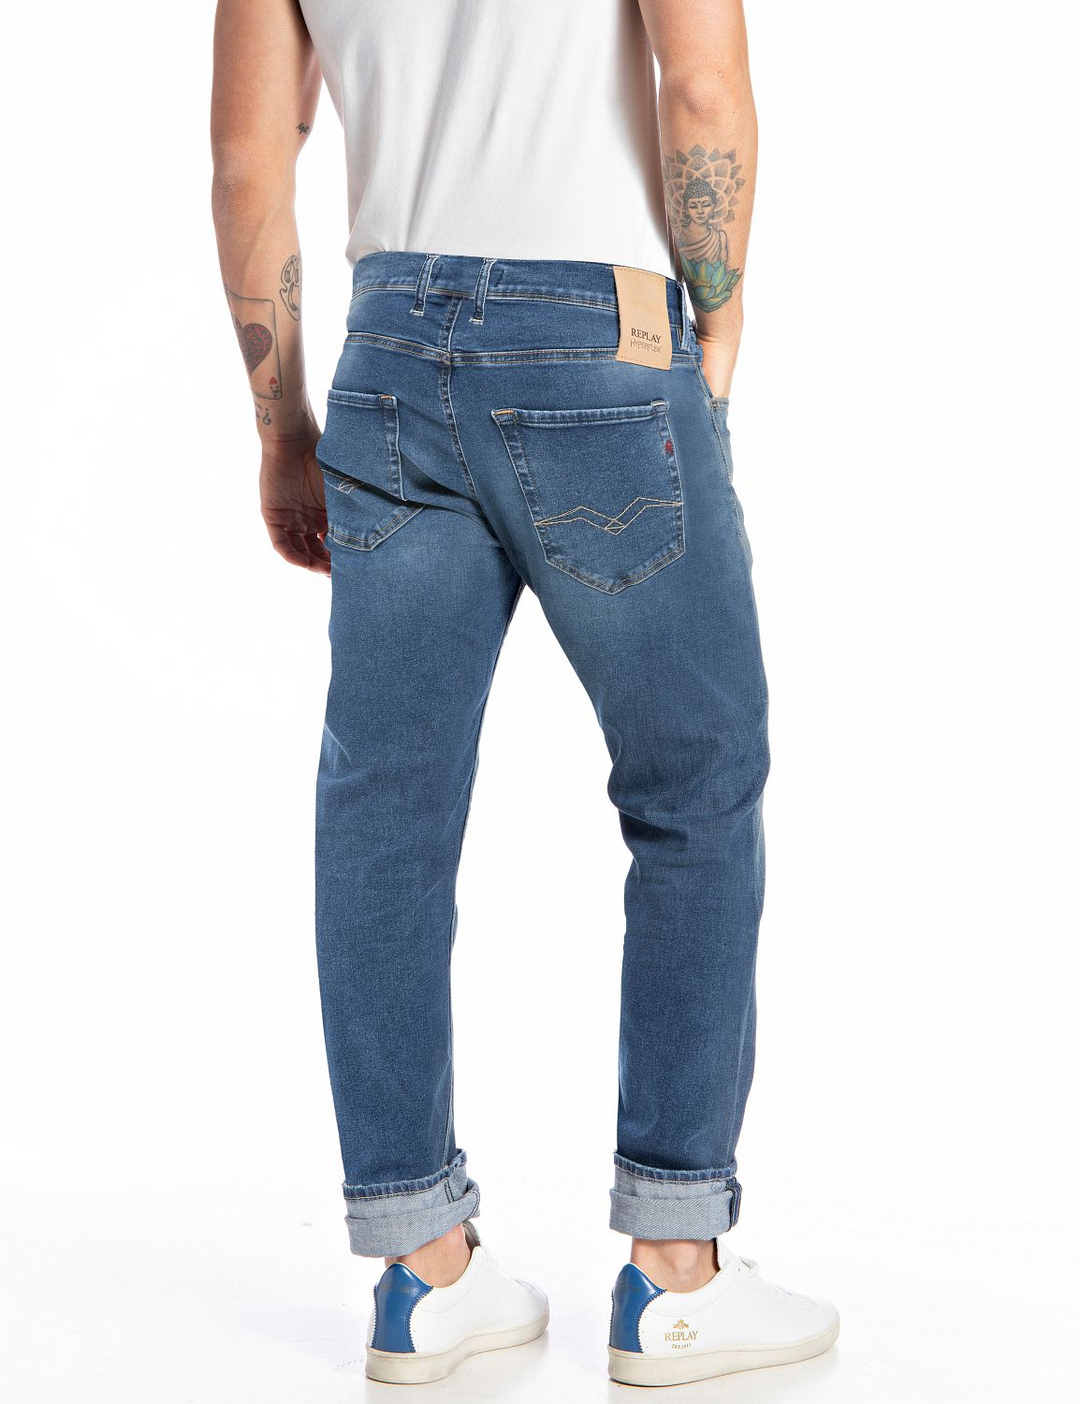 Hyperflex Grover Jeans